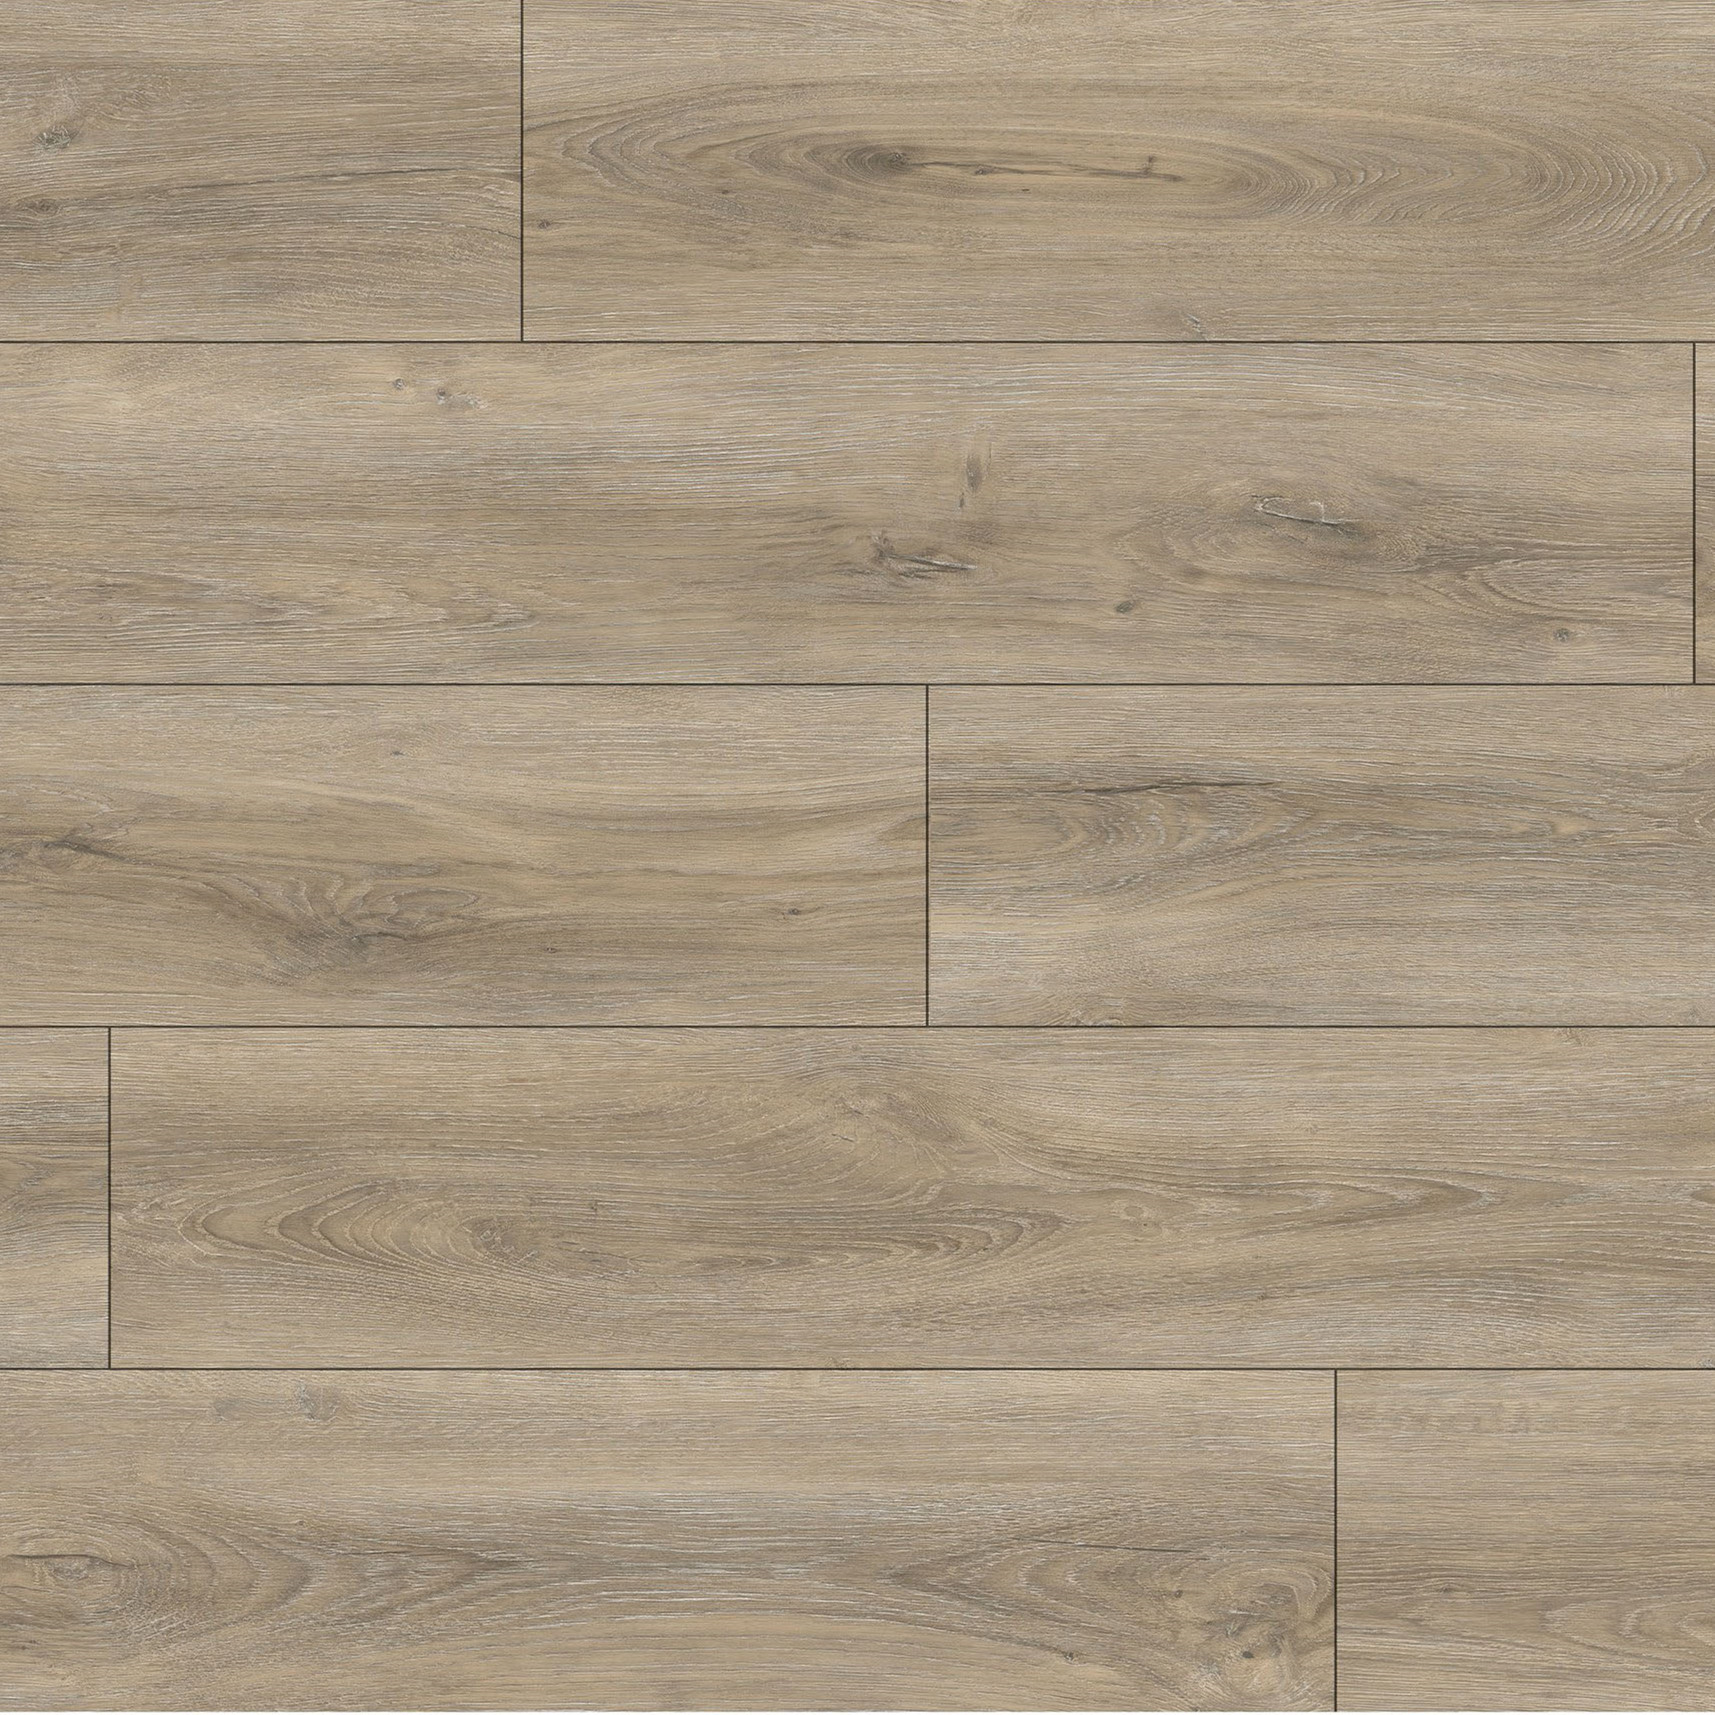 PriceList for Wide Wood Flooring -
 Kangton Natural Oak Rigid SPC Flooring with Cheap Price – Kangton